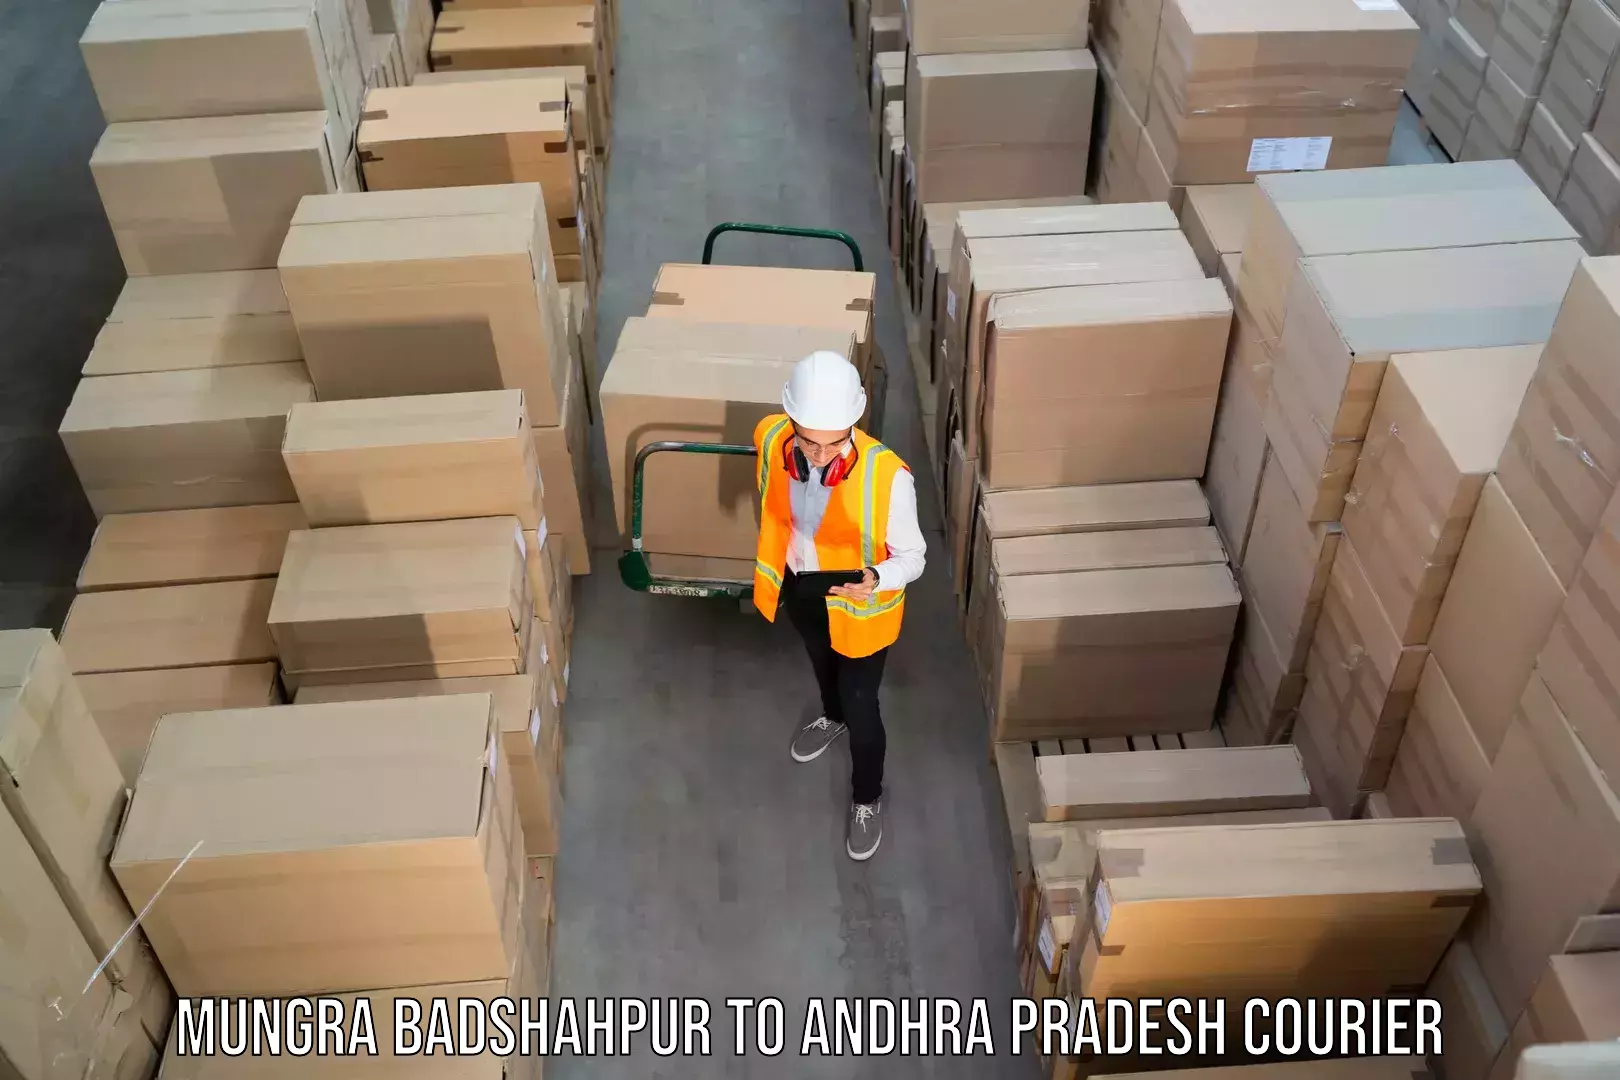 Express delivery network Mungra Badshahpur to Gudur